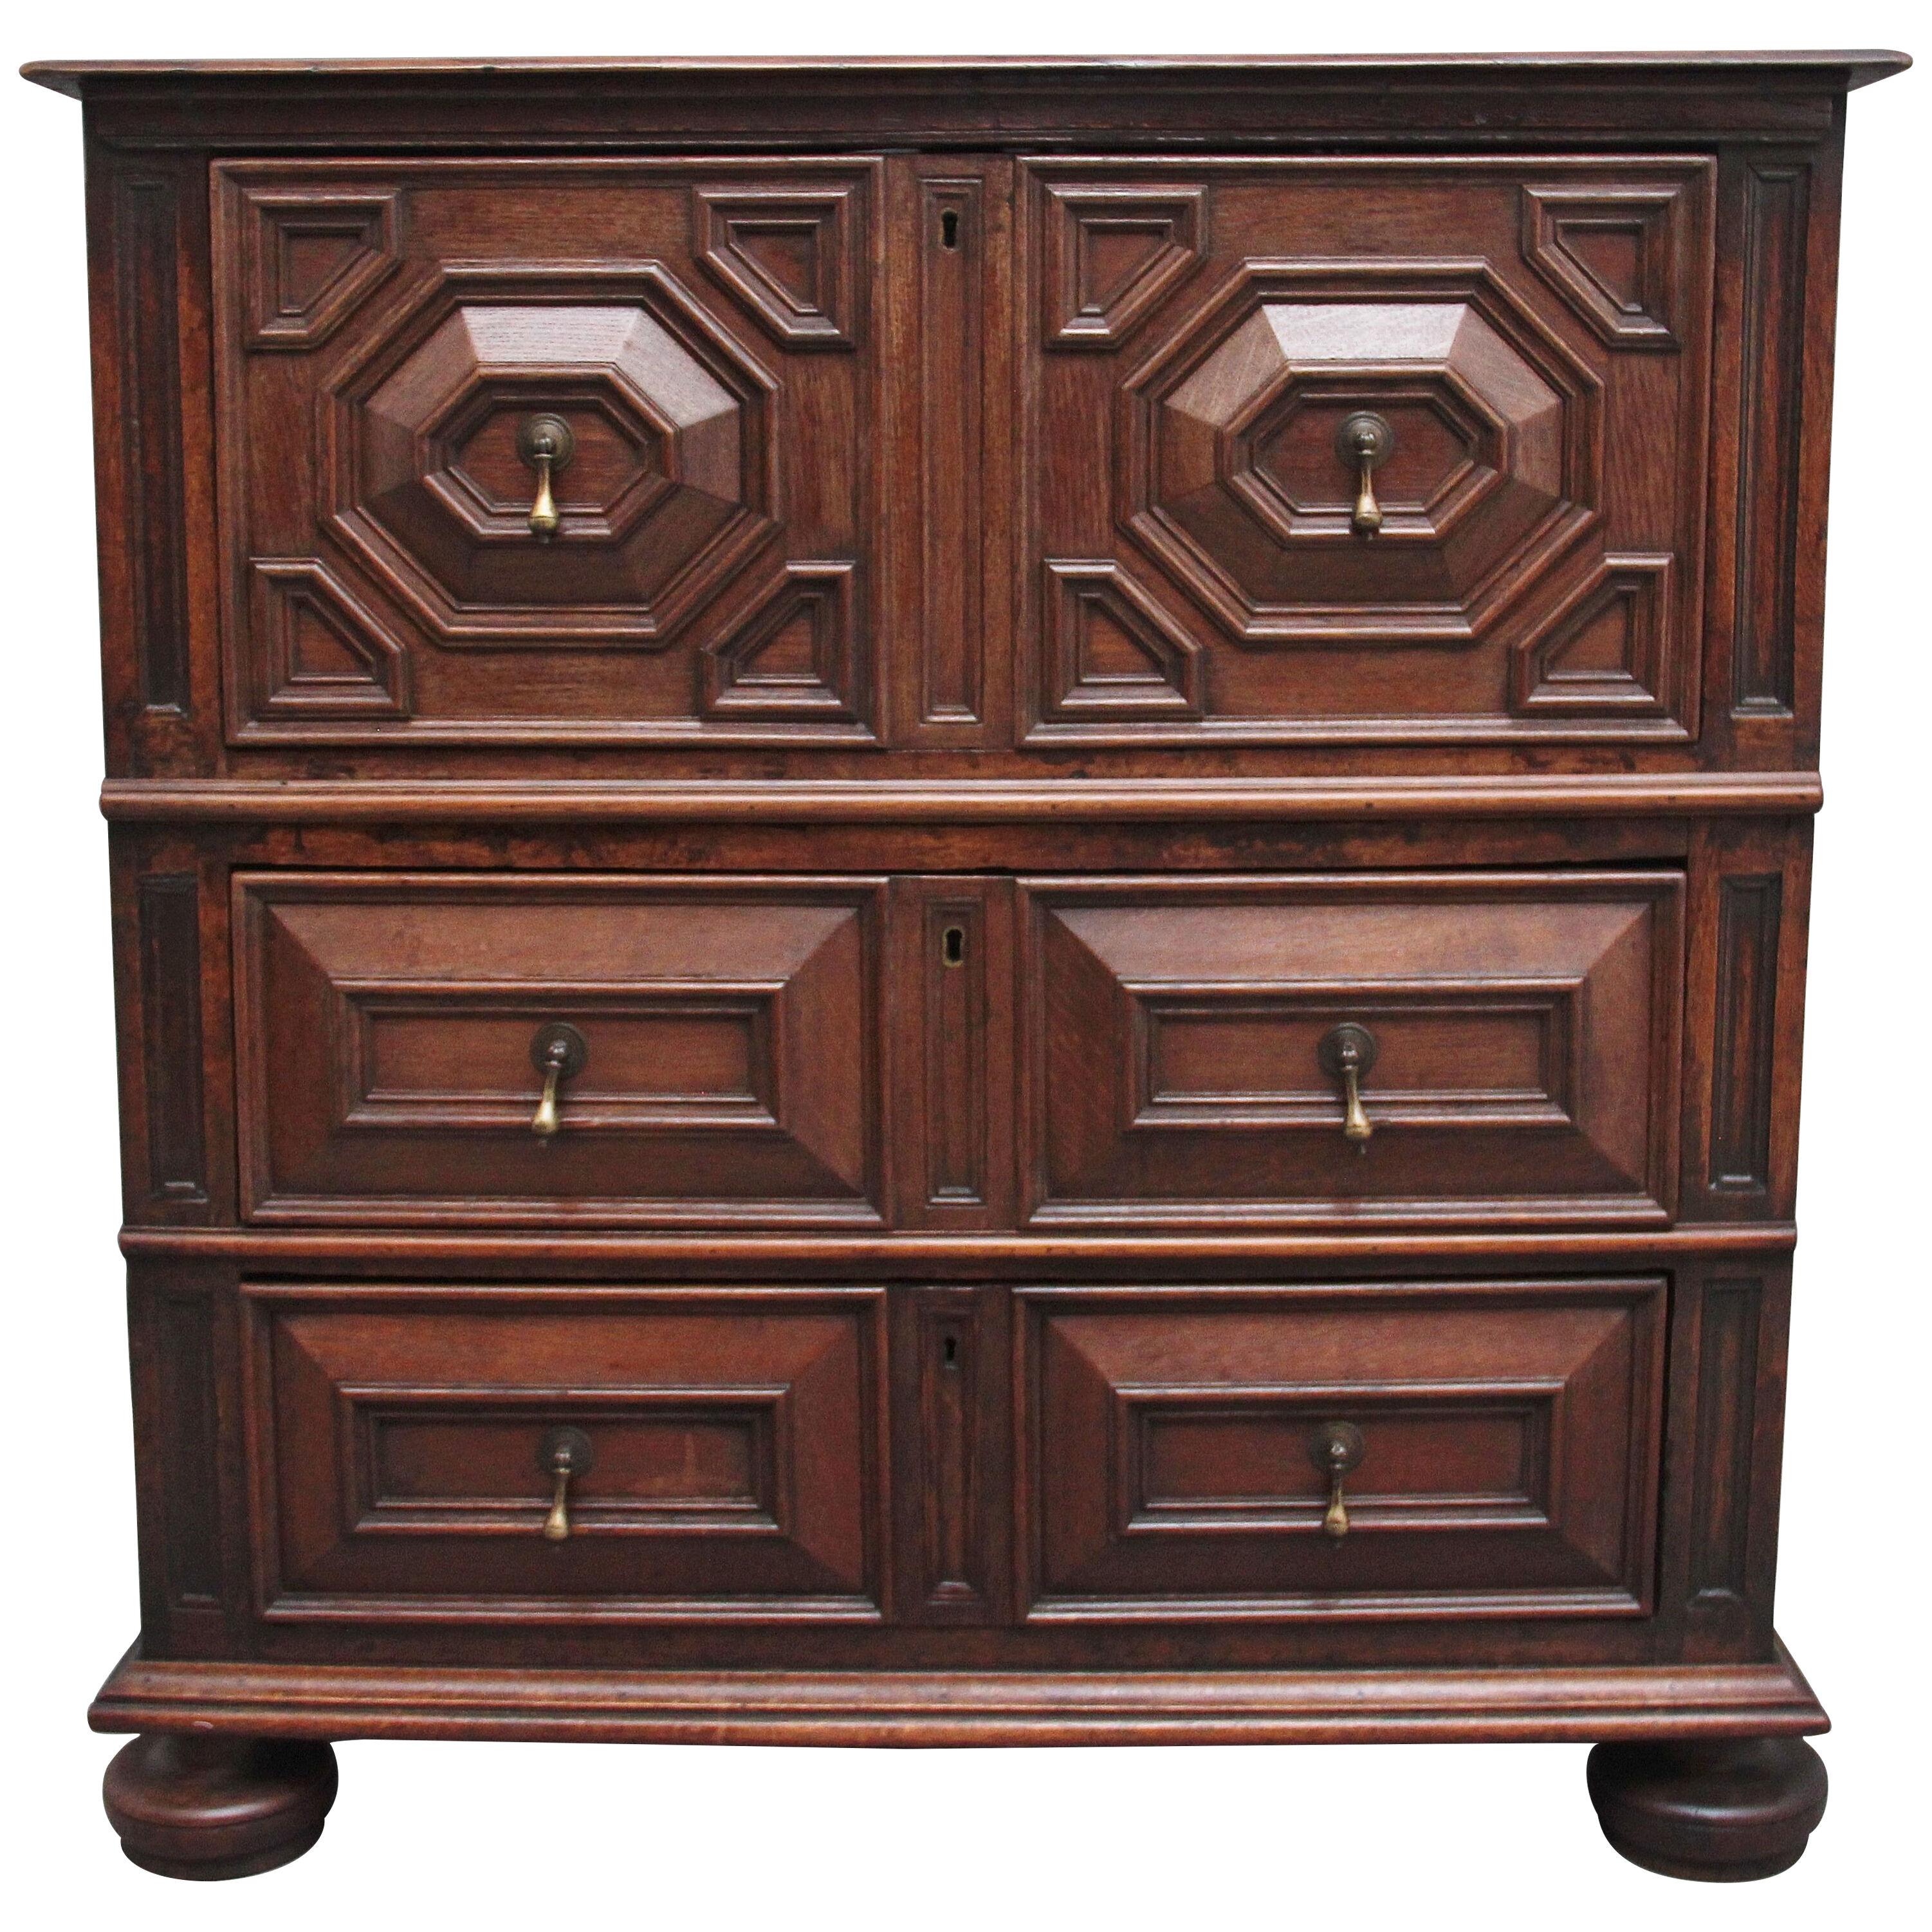 17th Century oak geometric chest of drawers